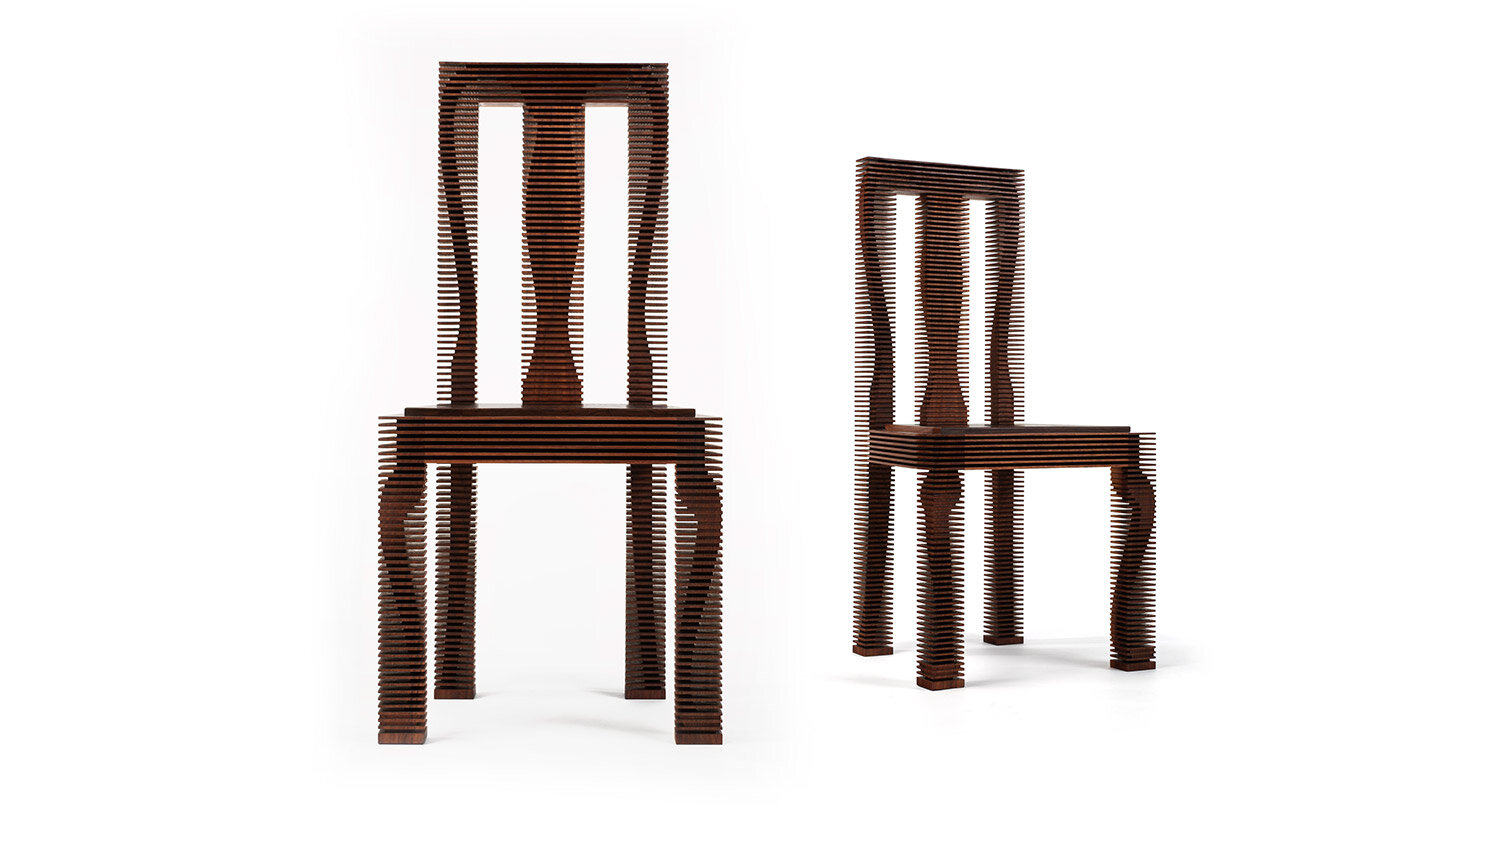 digital fabricated chairs